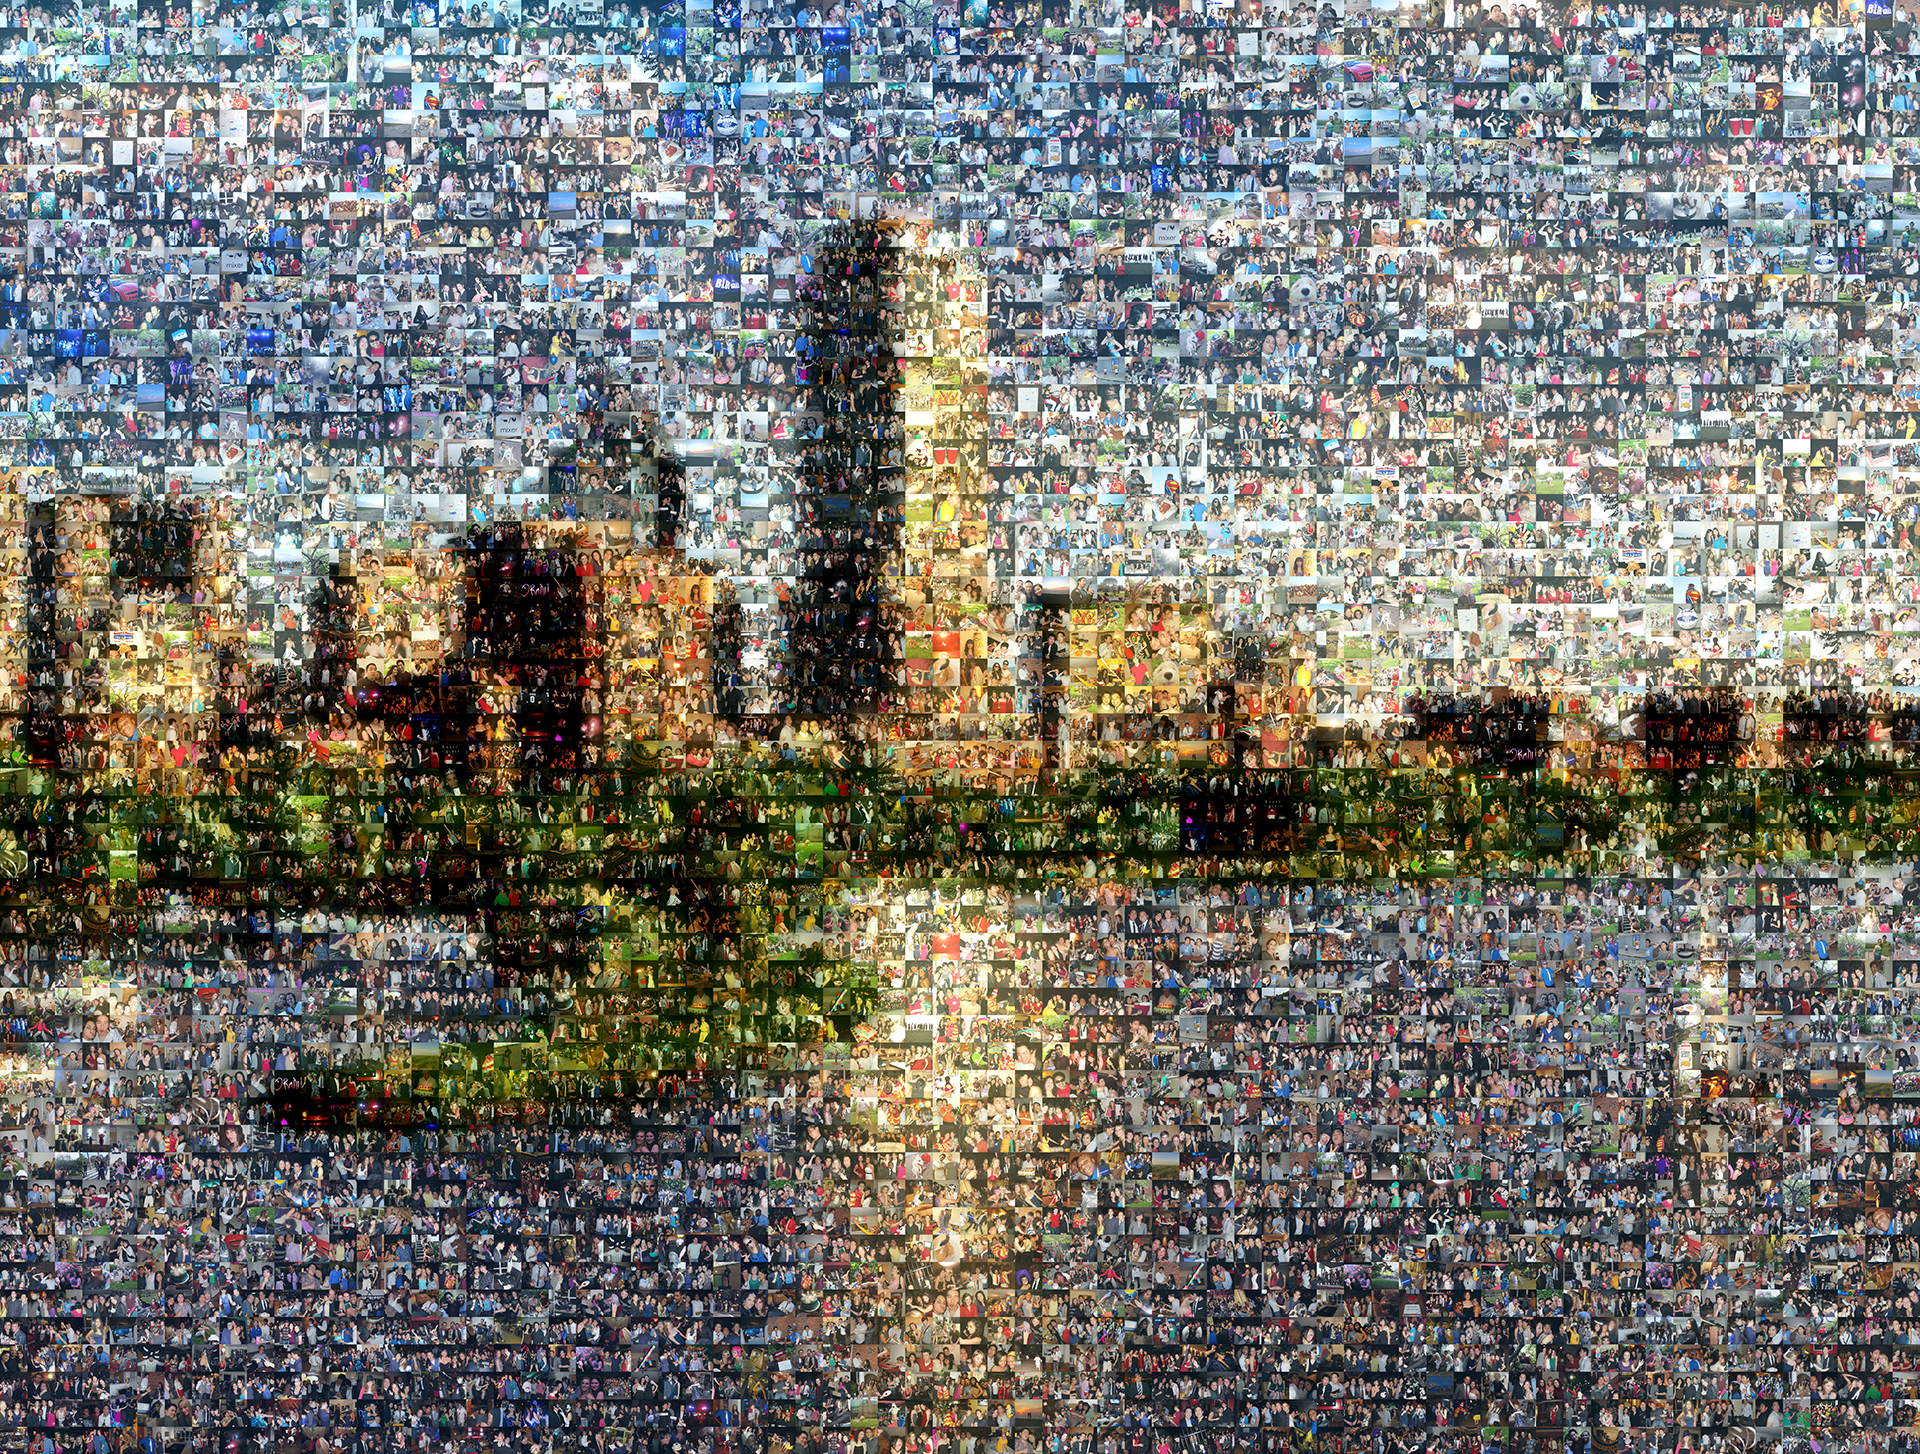 photo mosaic created using 1398 photos